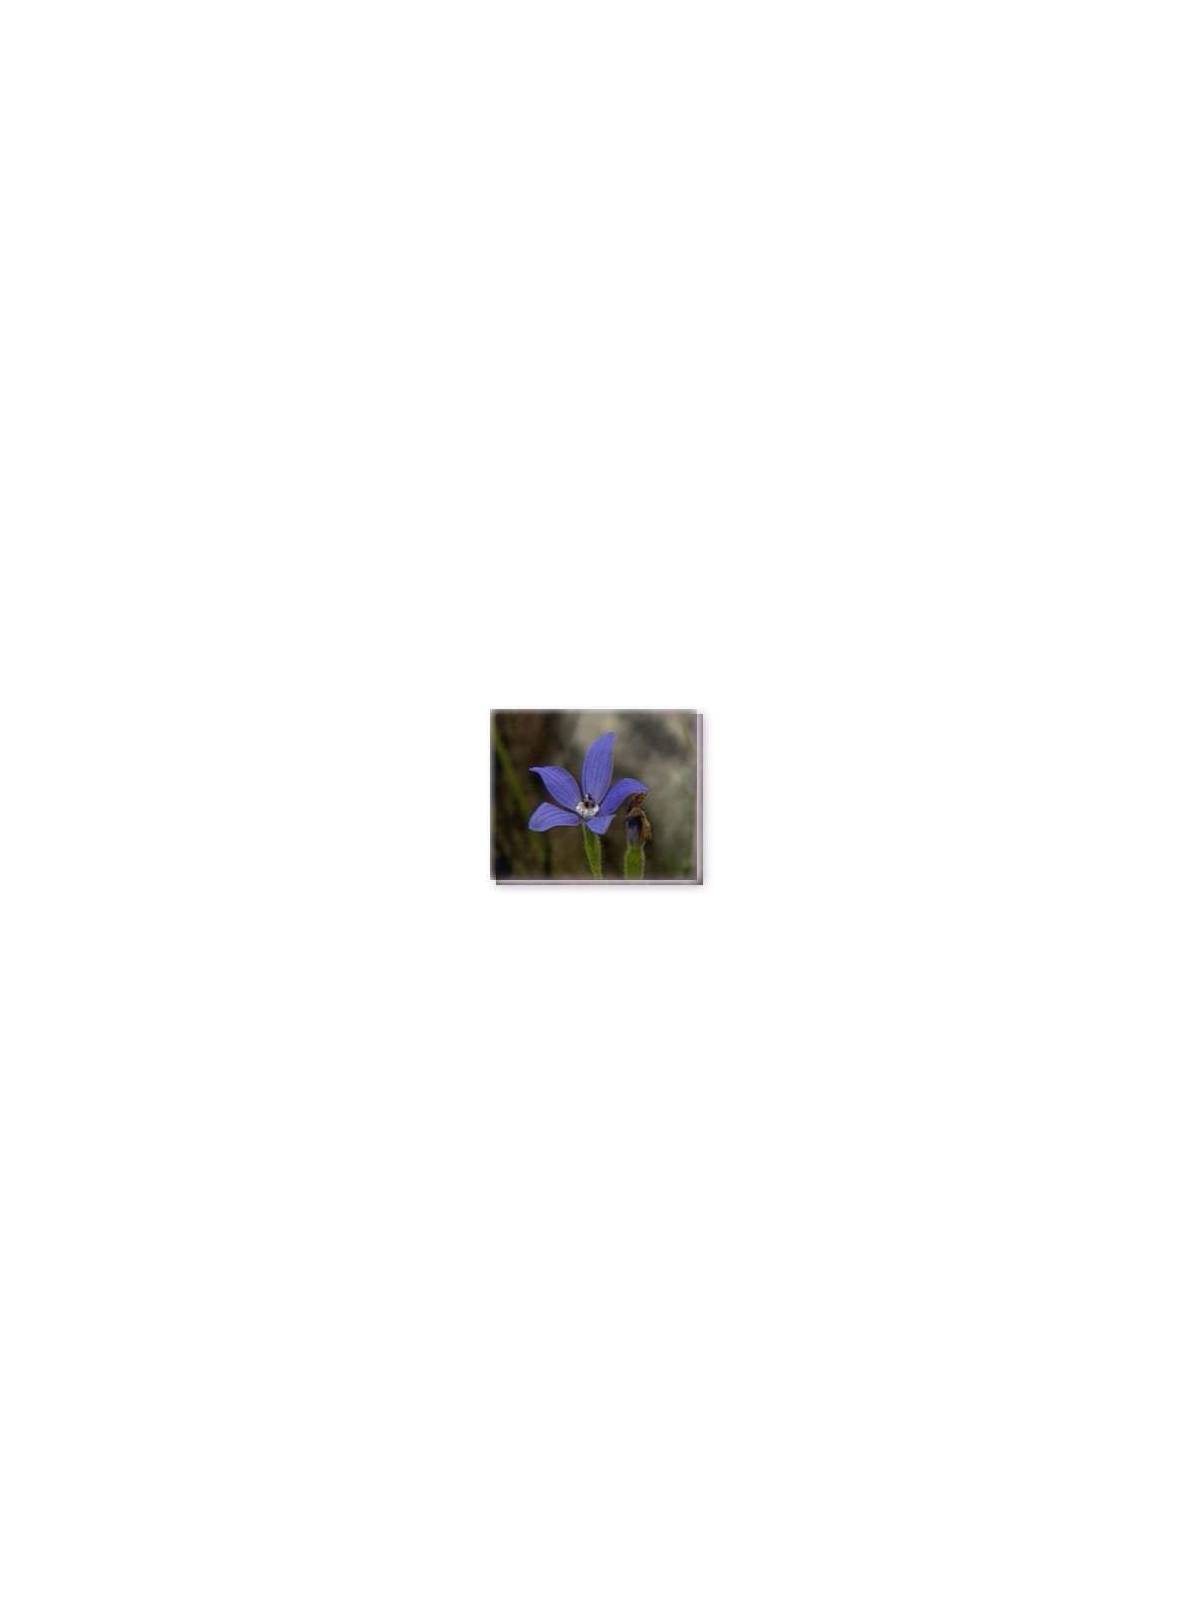 Buschblüten Blue China Orchid Living Essences